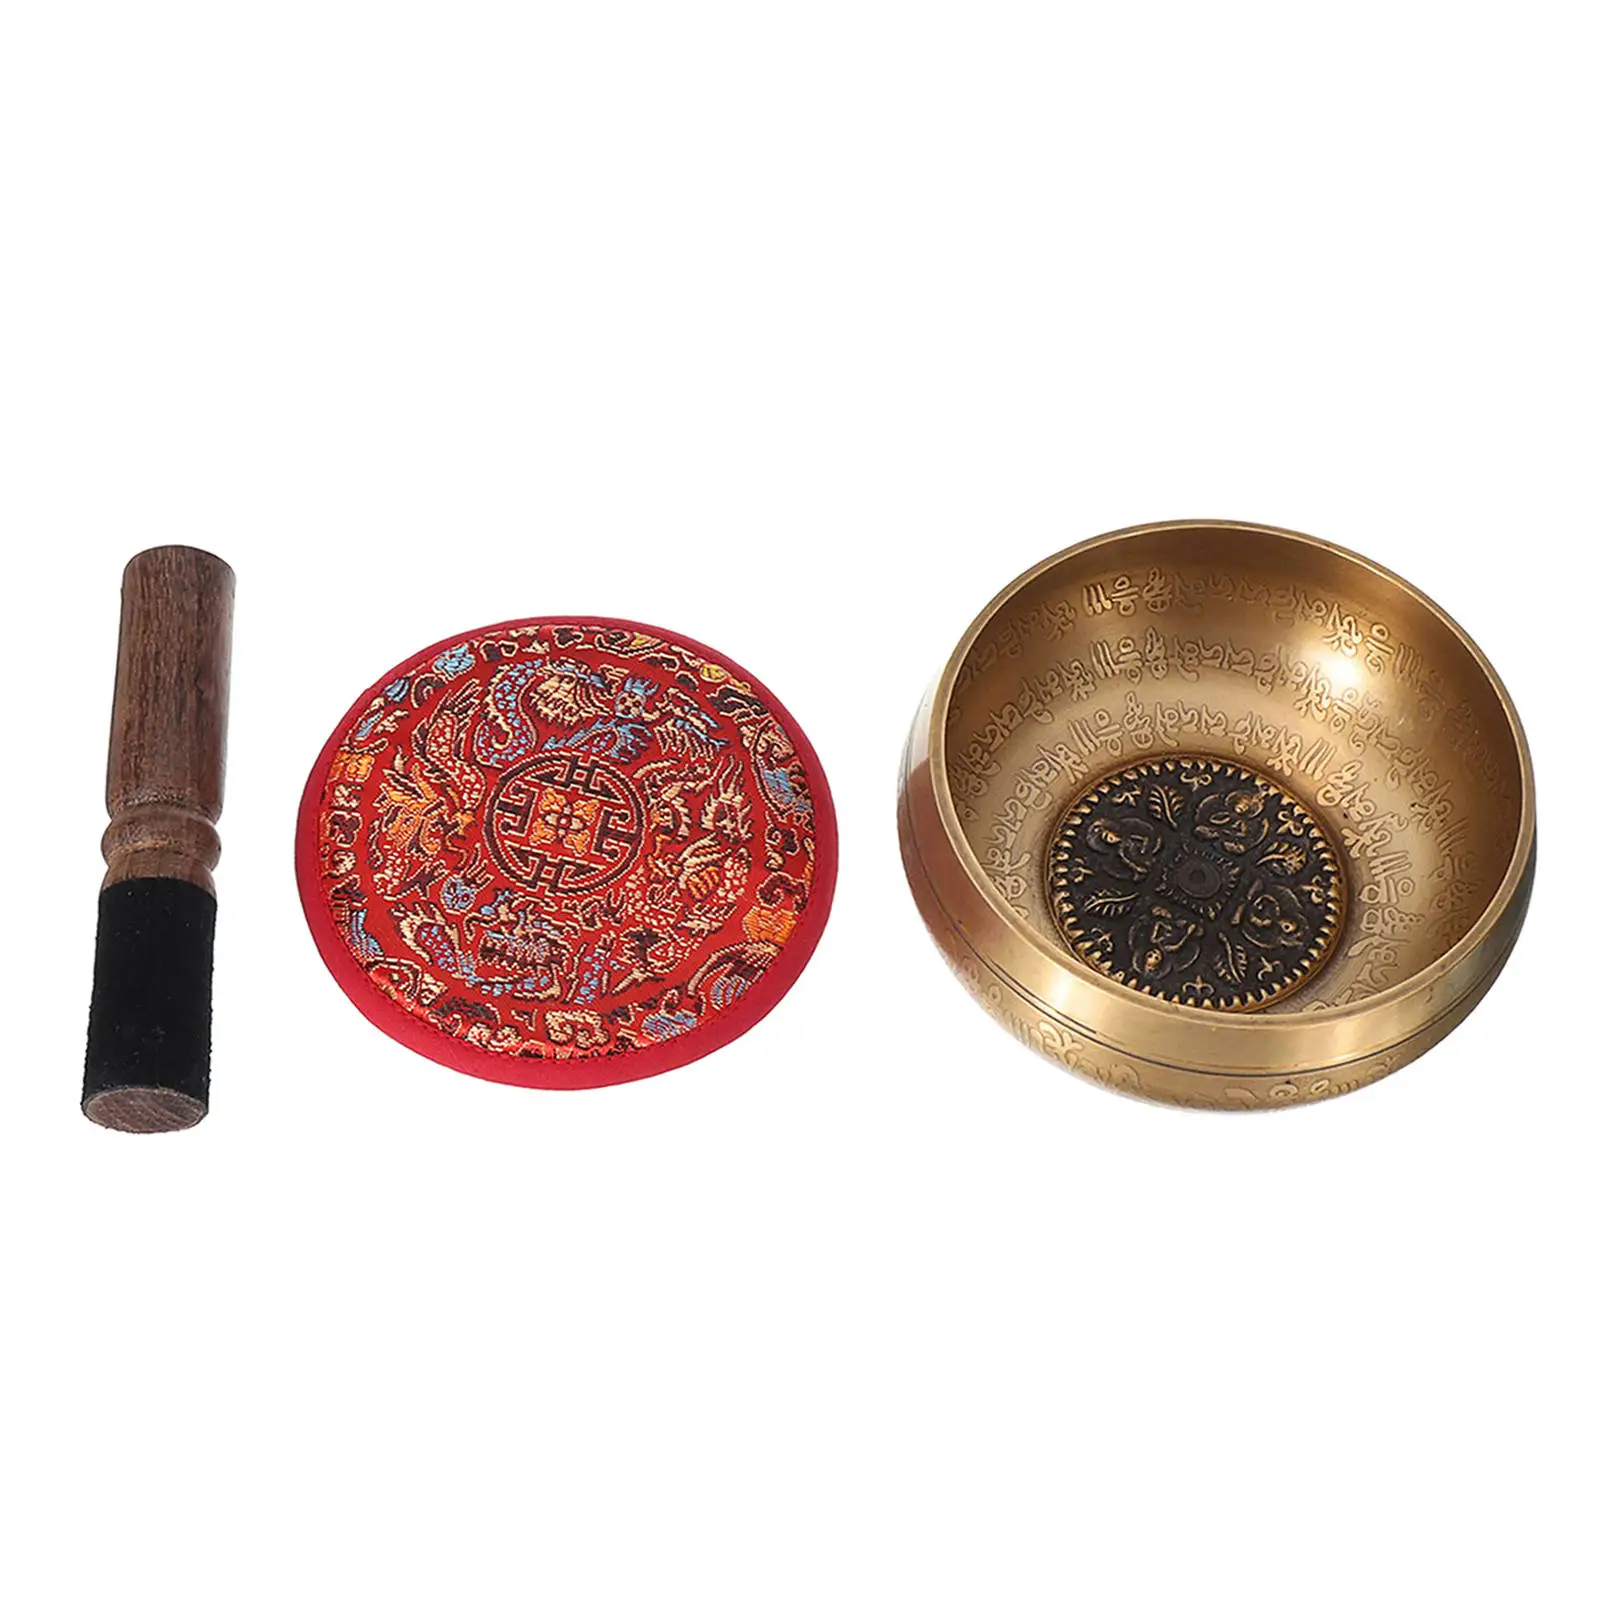 3pc Copper Singing Bowl Manual Tapping Craft Buddhist Bowl Religious Basin Tibetan Meditation Music Bowl Tibetan Singing Bowl